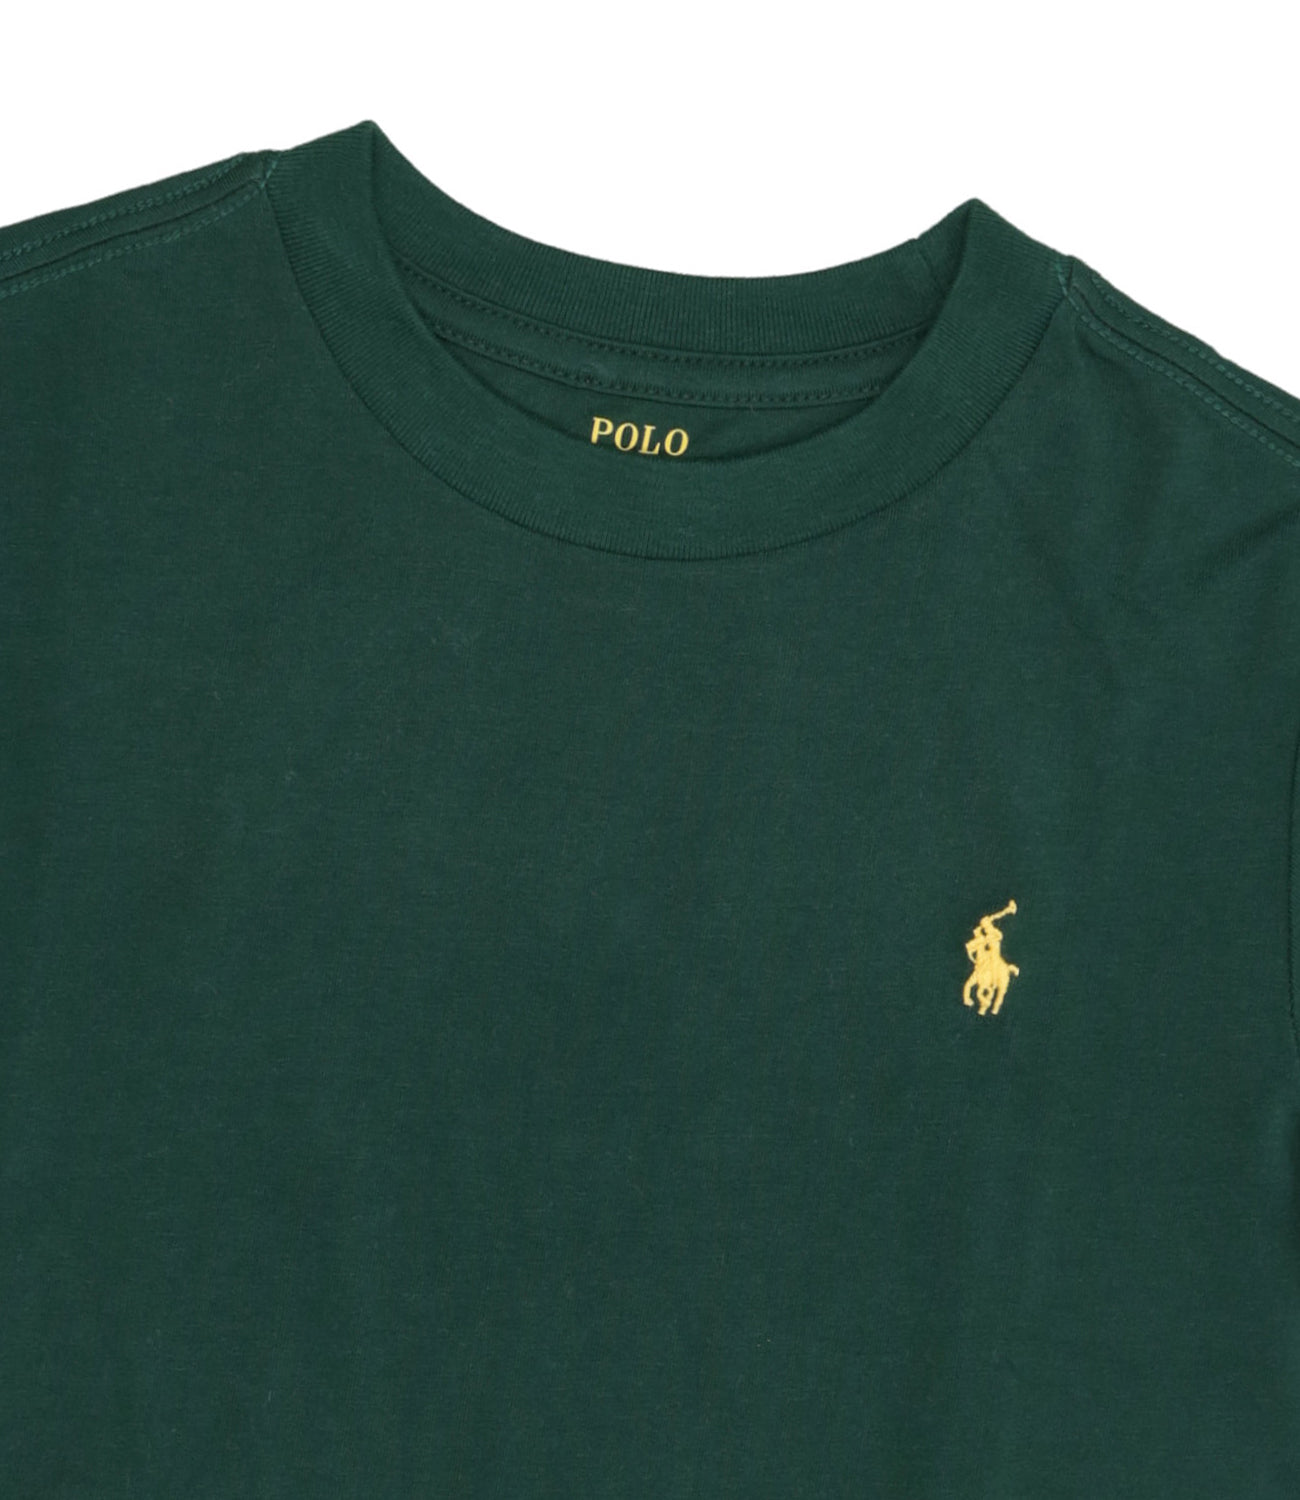 Ralph Lauren Childrenswear | T-Shirt Verde